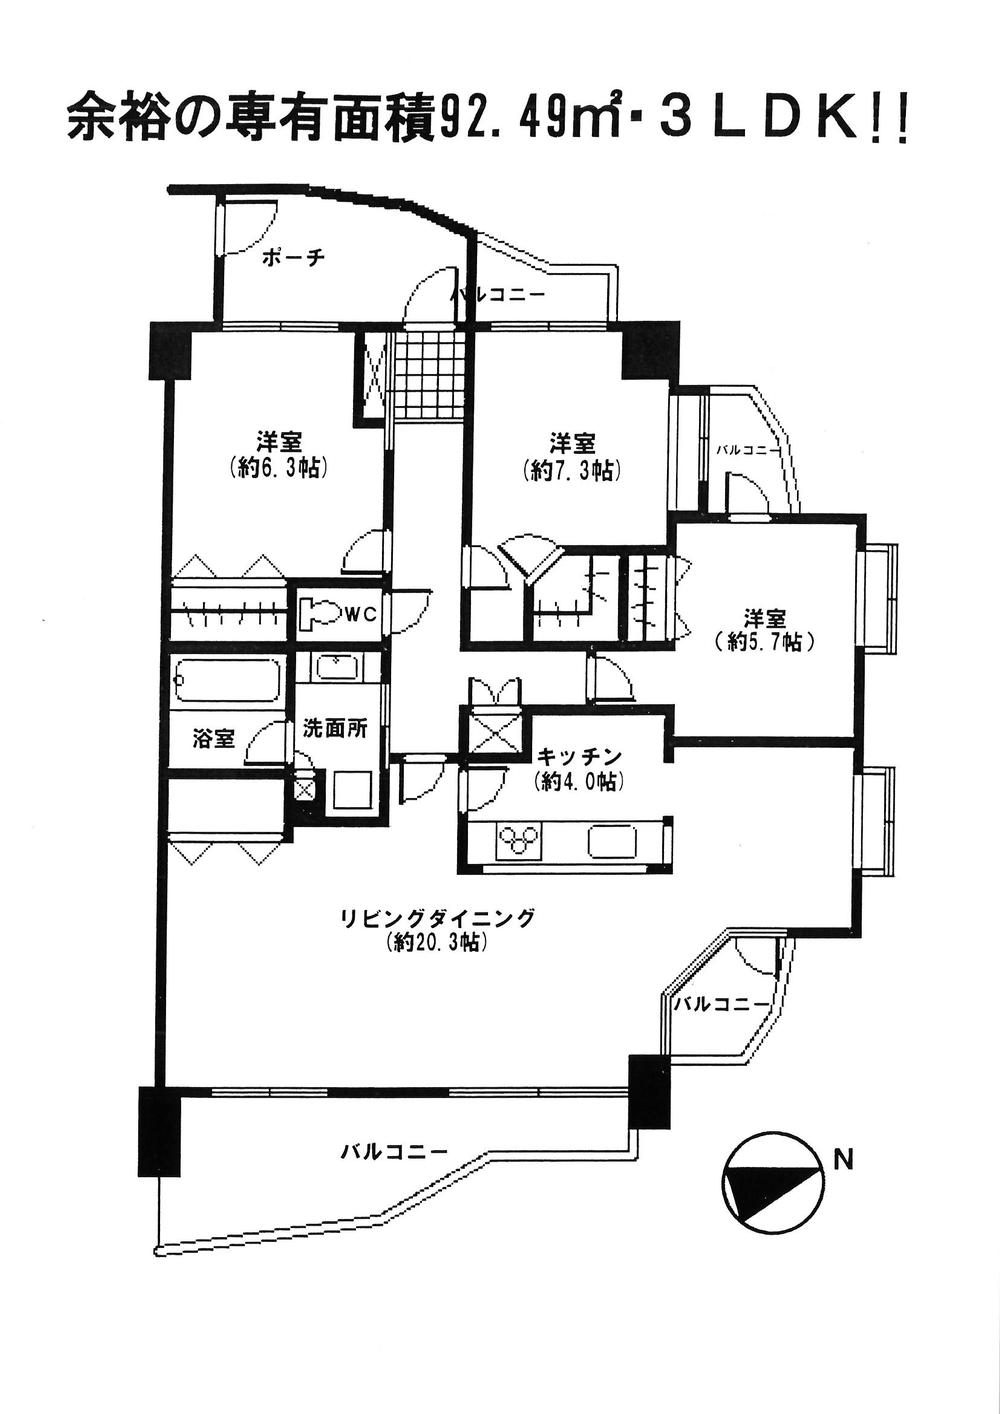 Floor plan. 3LDK, Price 21,700,000 yen, Occupied area 92.49 sq m , Balcony area 19.51 sq m